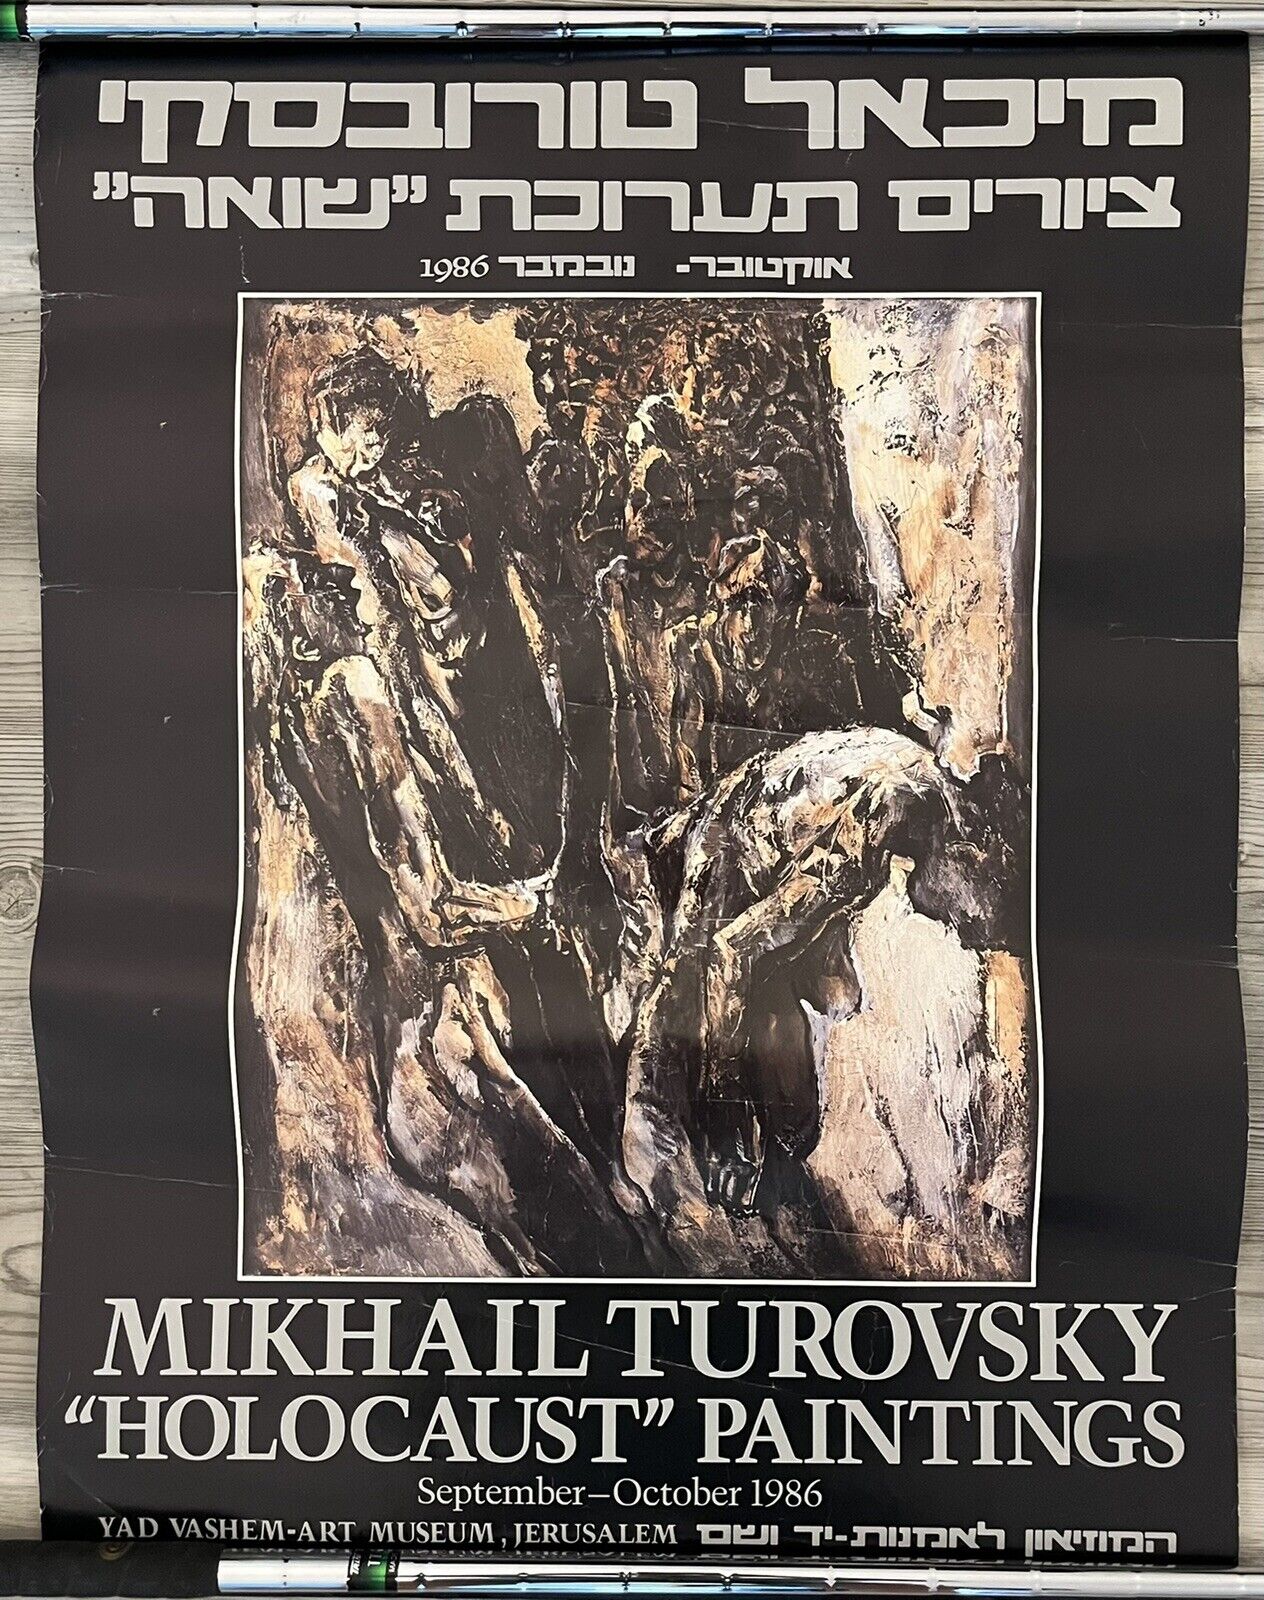 Mikhail Turovsky “Holocaust” Paintings Exhibit Poster 1986 Yad Vashen Jerusalem